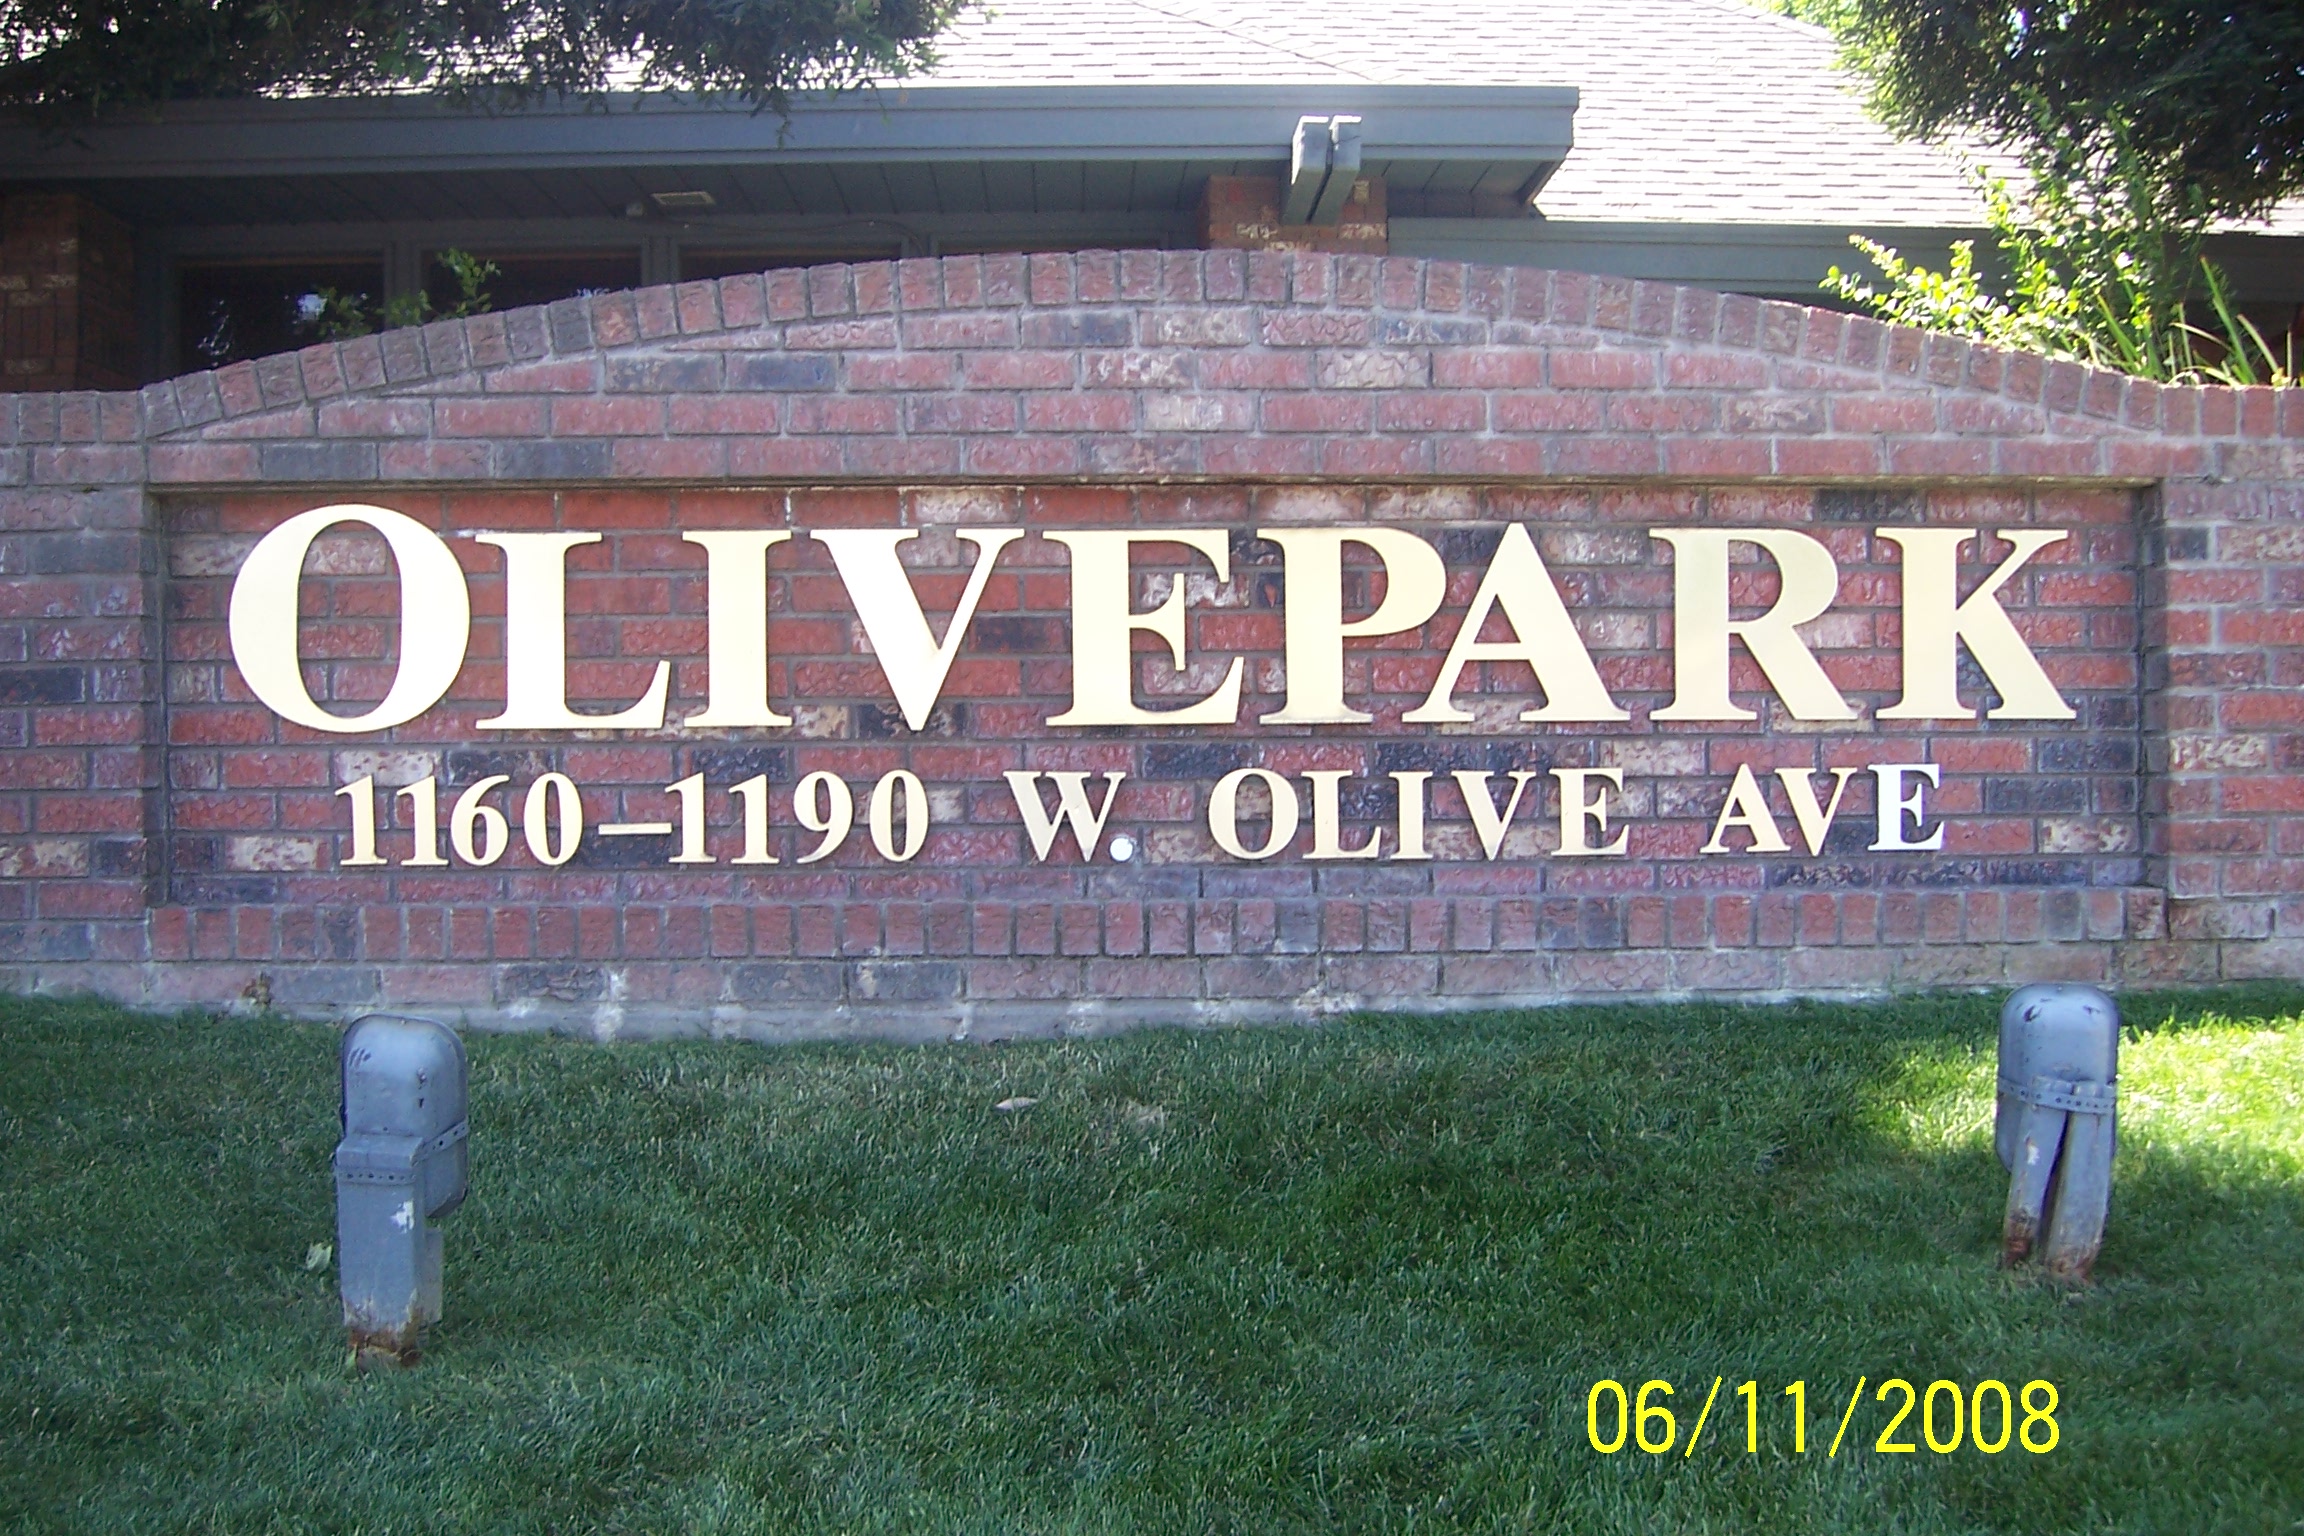 Olivepark Heritage Property Development and Management